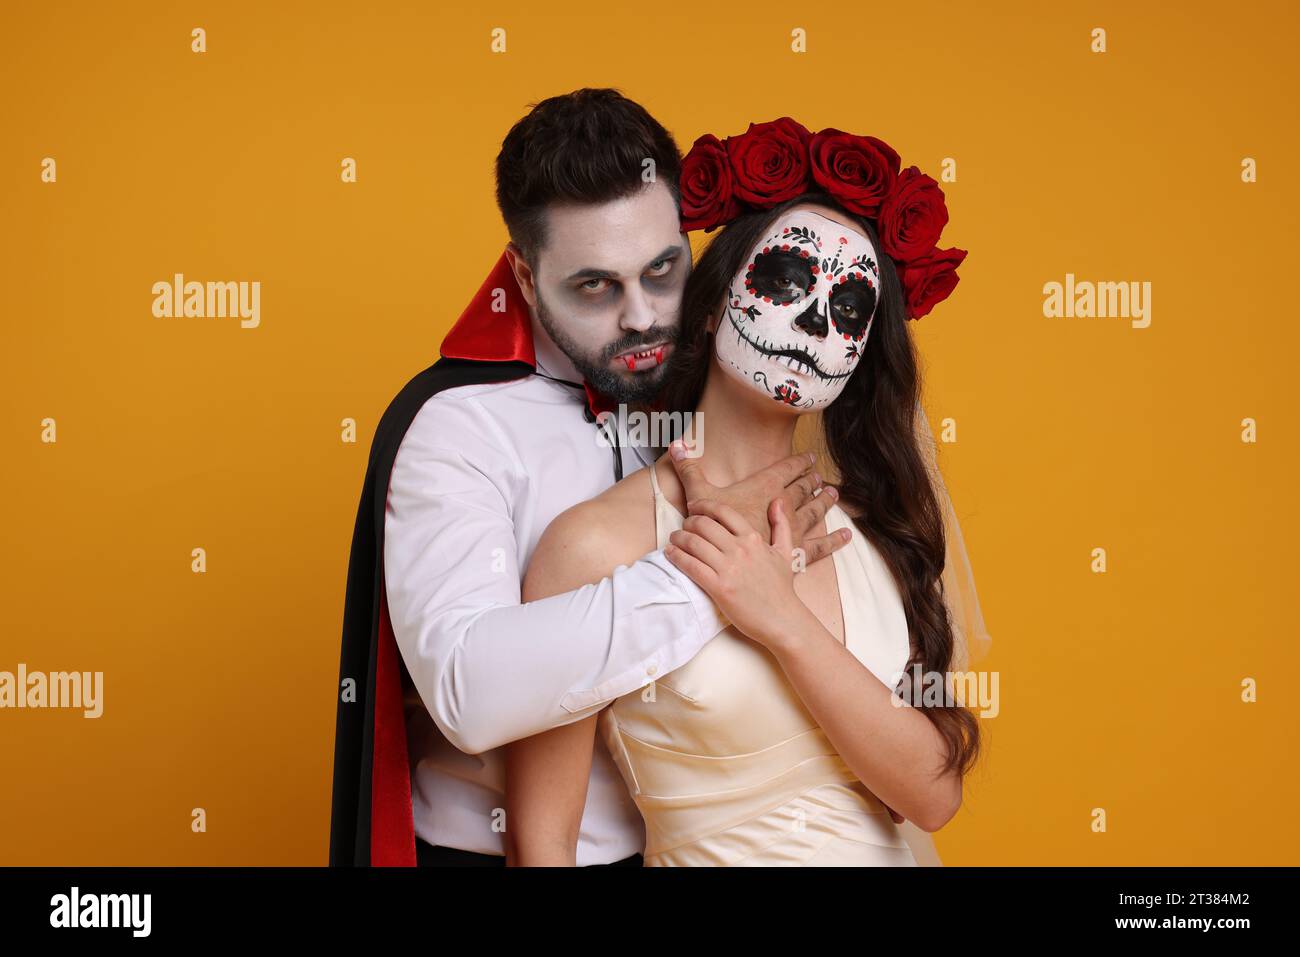 Couple in scary bride and vampire costumes on orange background. Halloween celebration Stock Photo